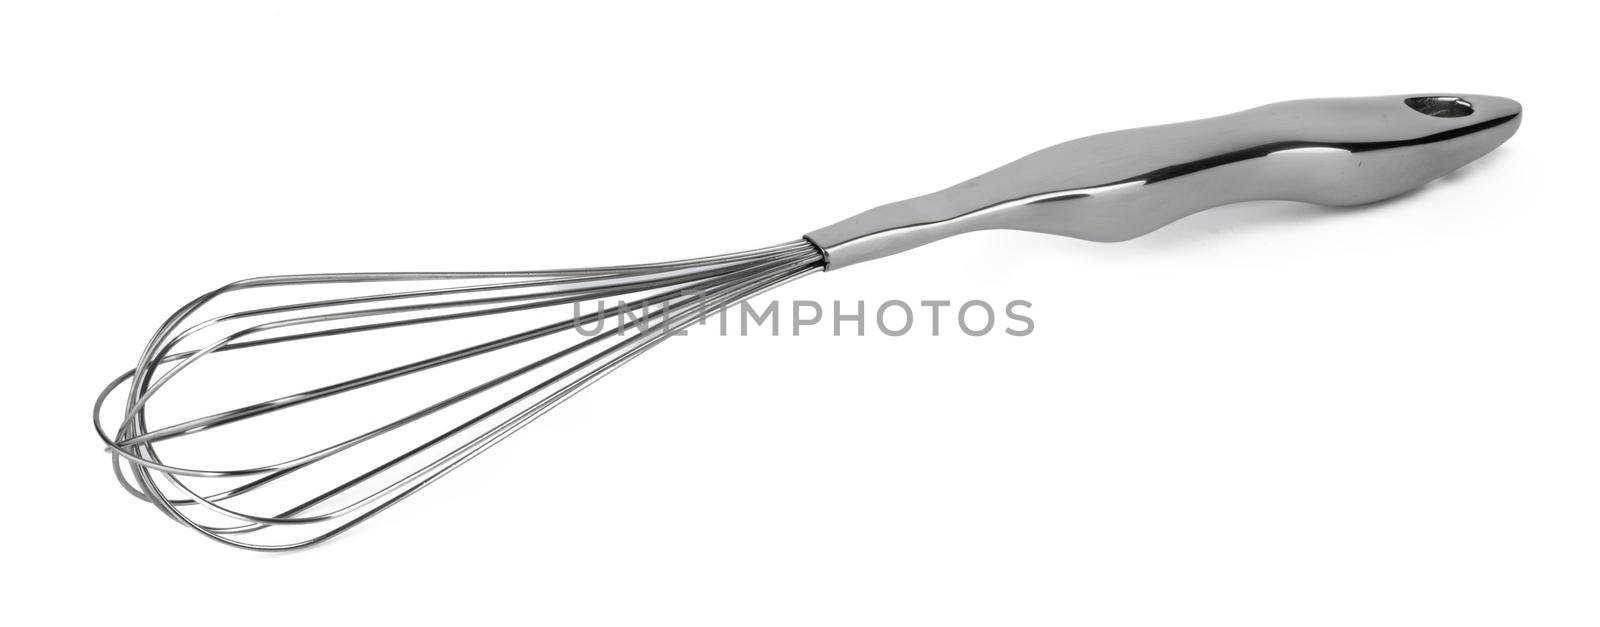 Aluminum new kitchen utensil isolated on white by Fabrikasimf